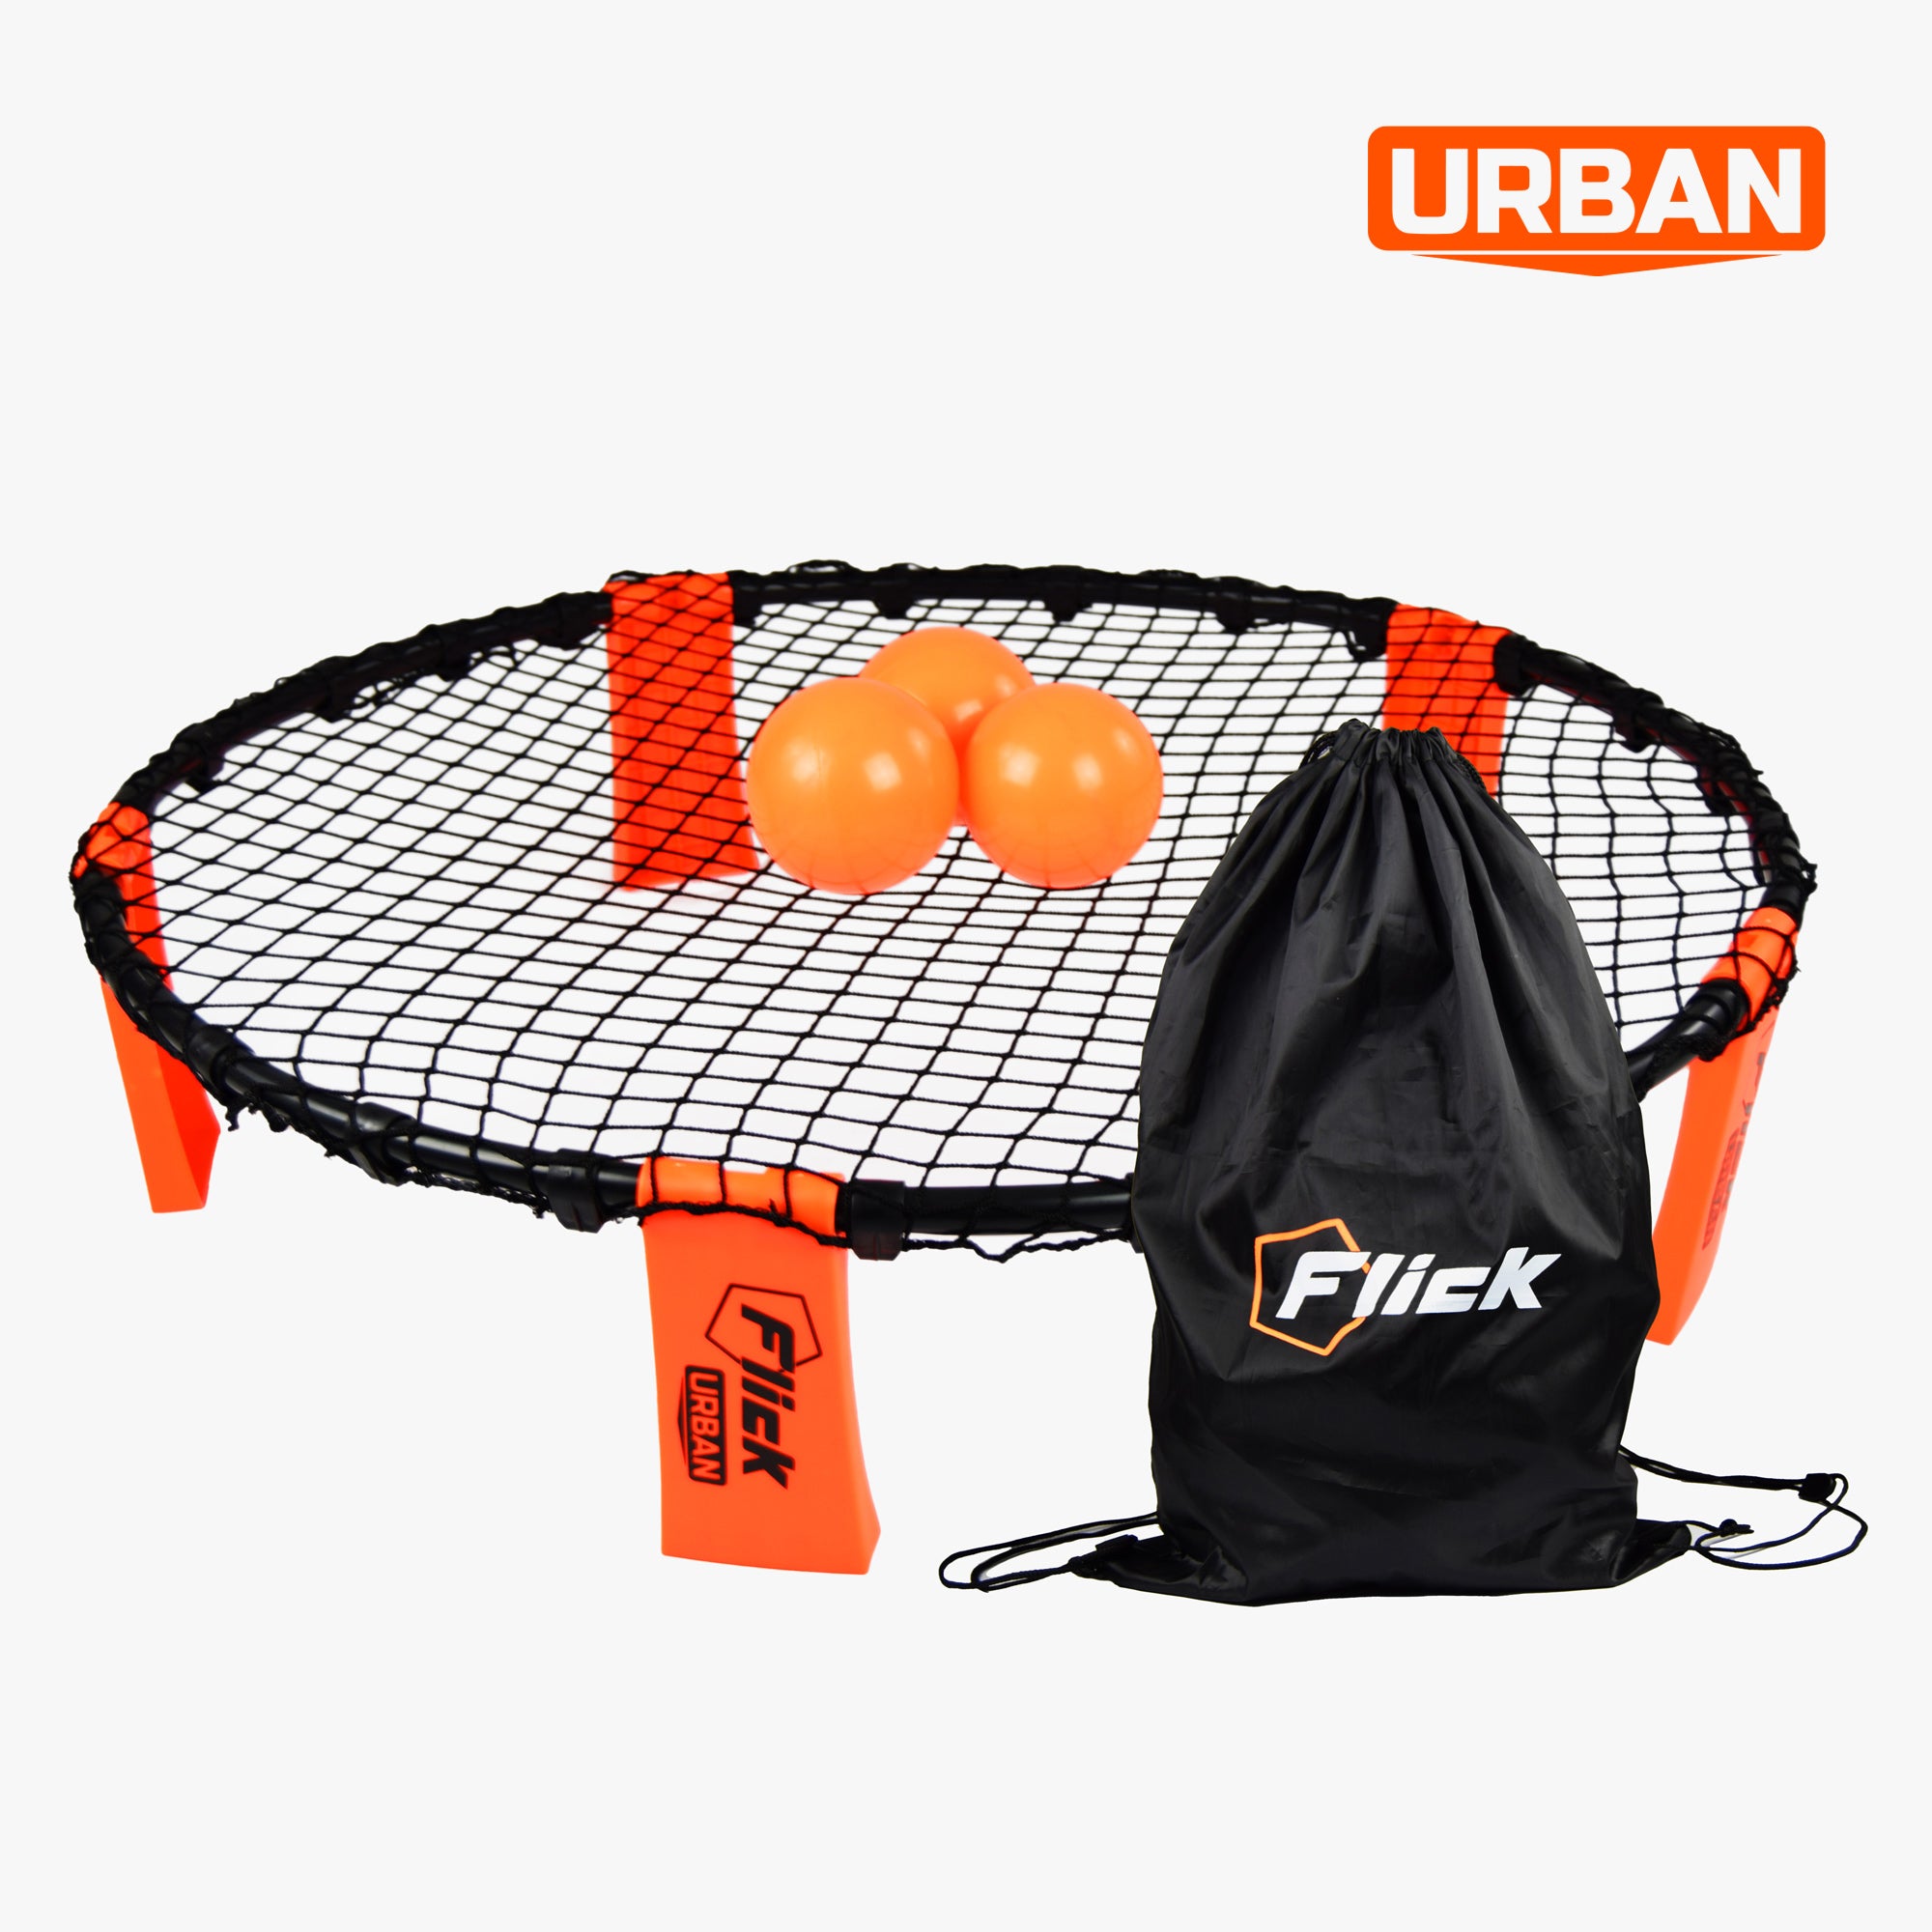 Urban Pingball!